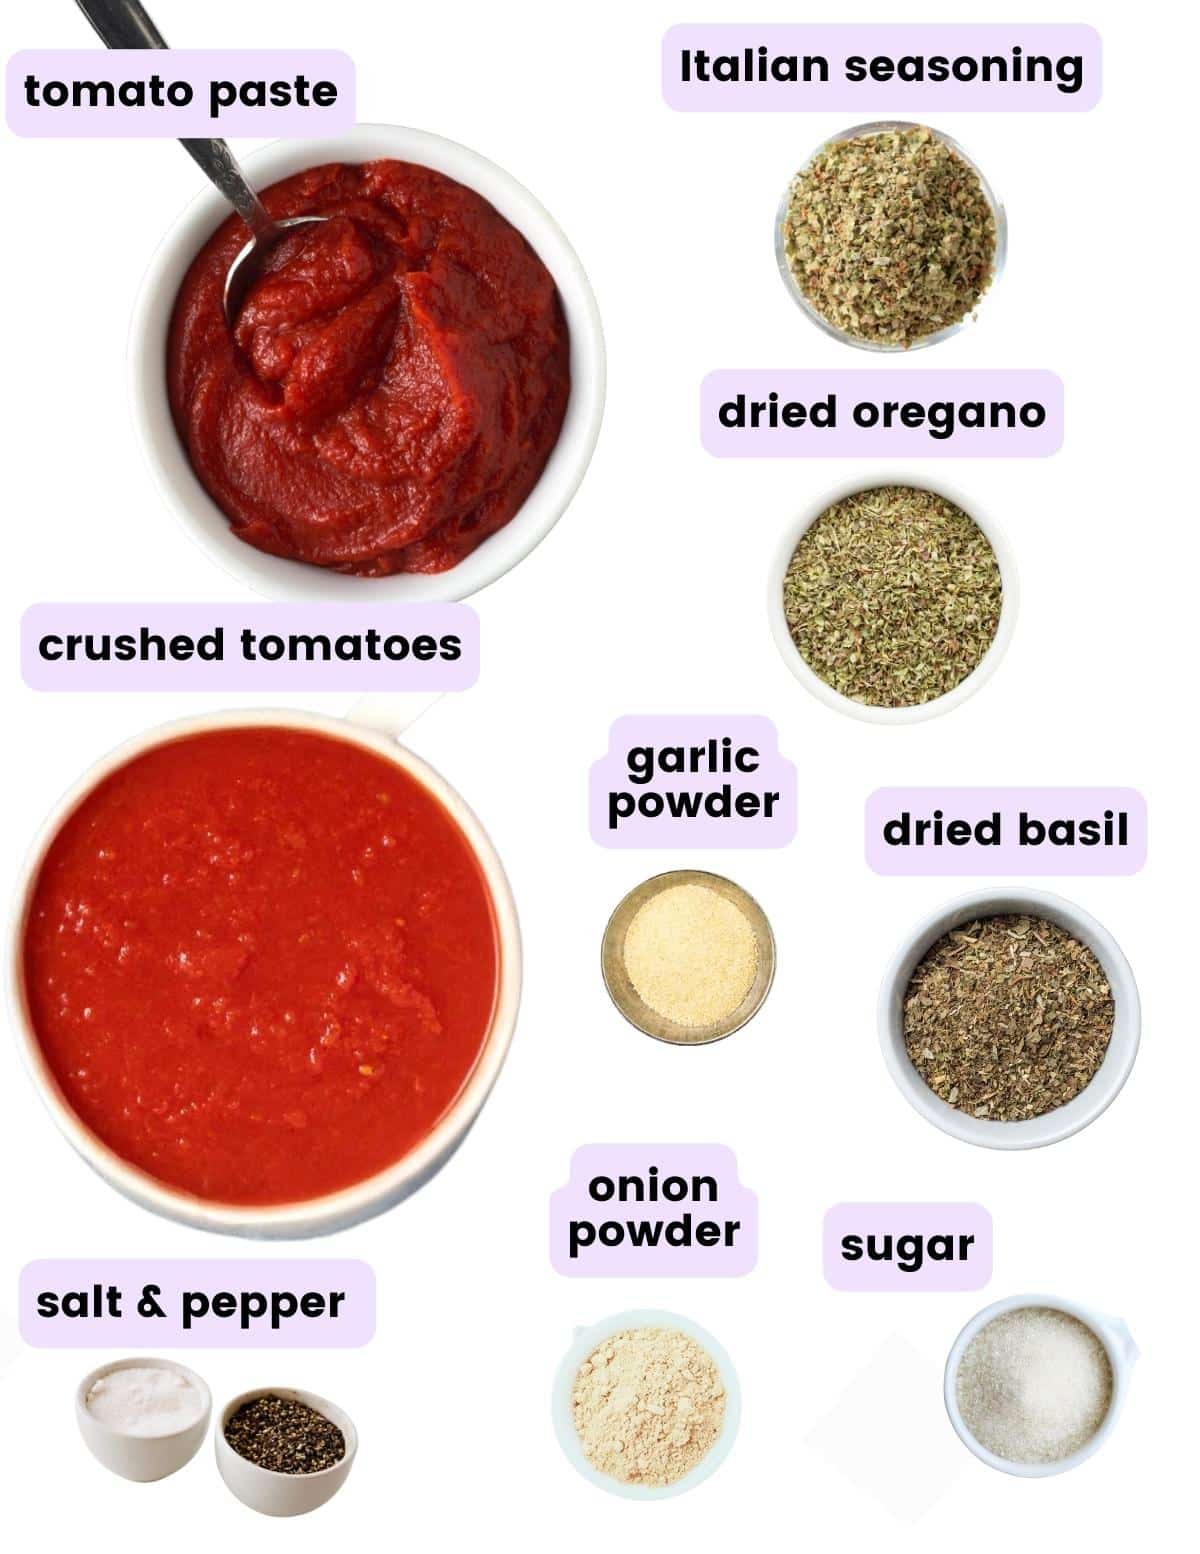 tomato paste, crushed tomatoes, Italian seasoning, basil, oregano, onion powder, garlic powder, salt, pepper & sugar